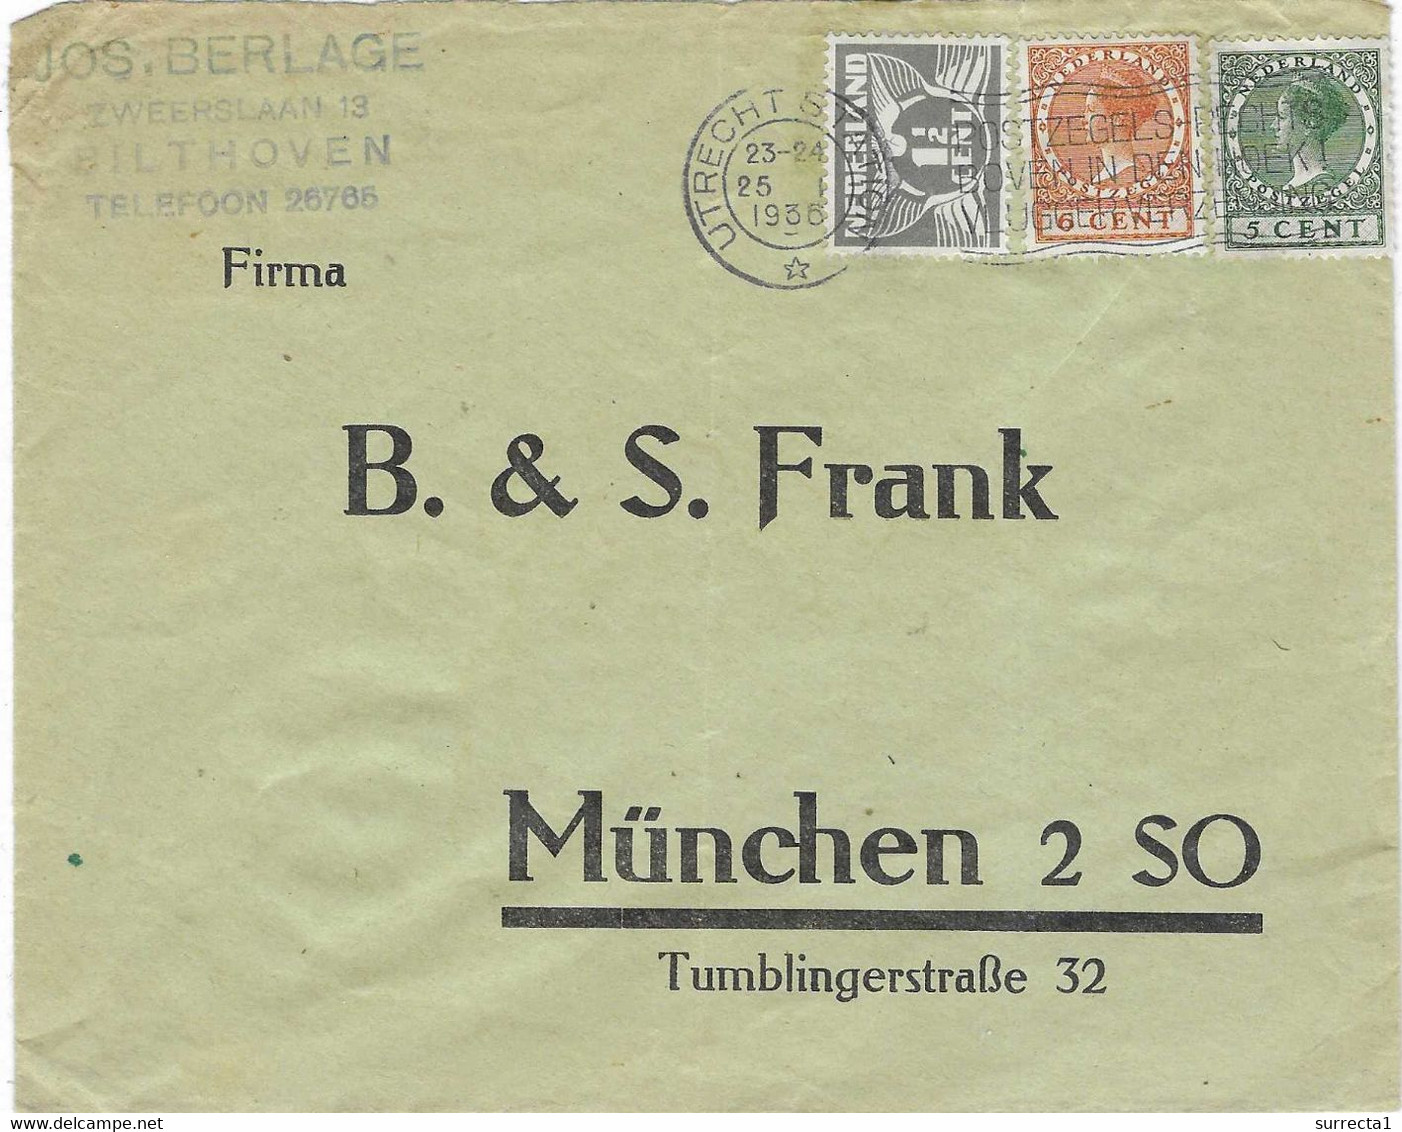 1936 / Enveloppe Commerciale Jos. BERLAGE / Bilthoven Nederland / Flamme Utrecht Station / Pour München Allemagne - Pays-Bas